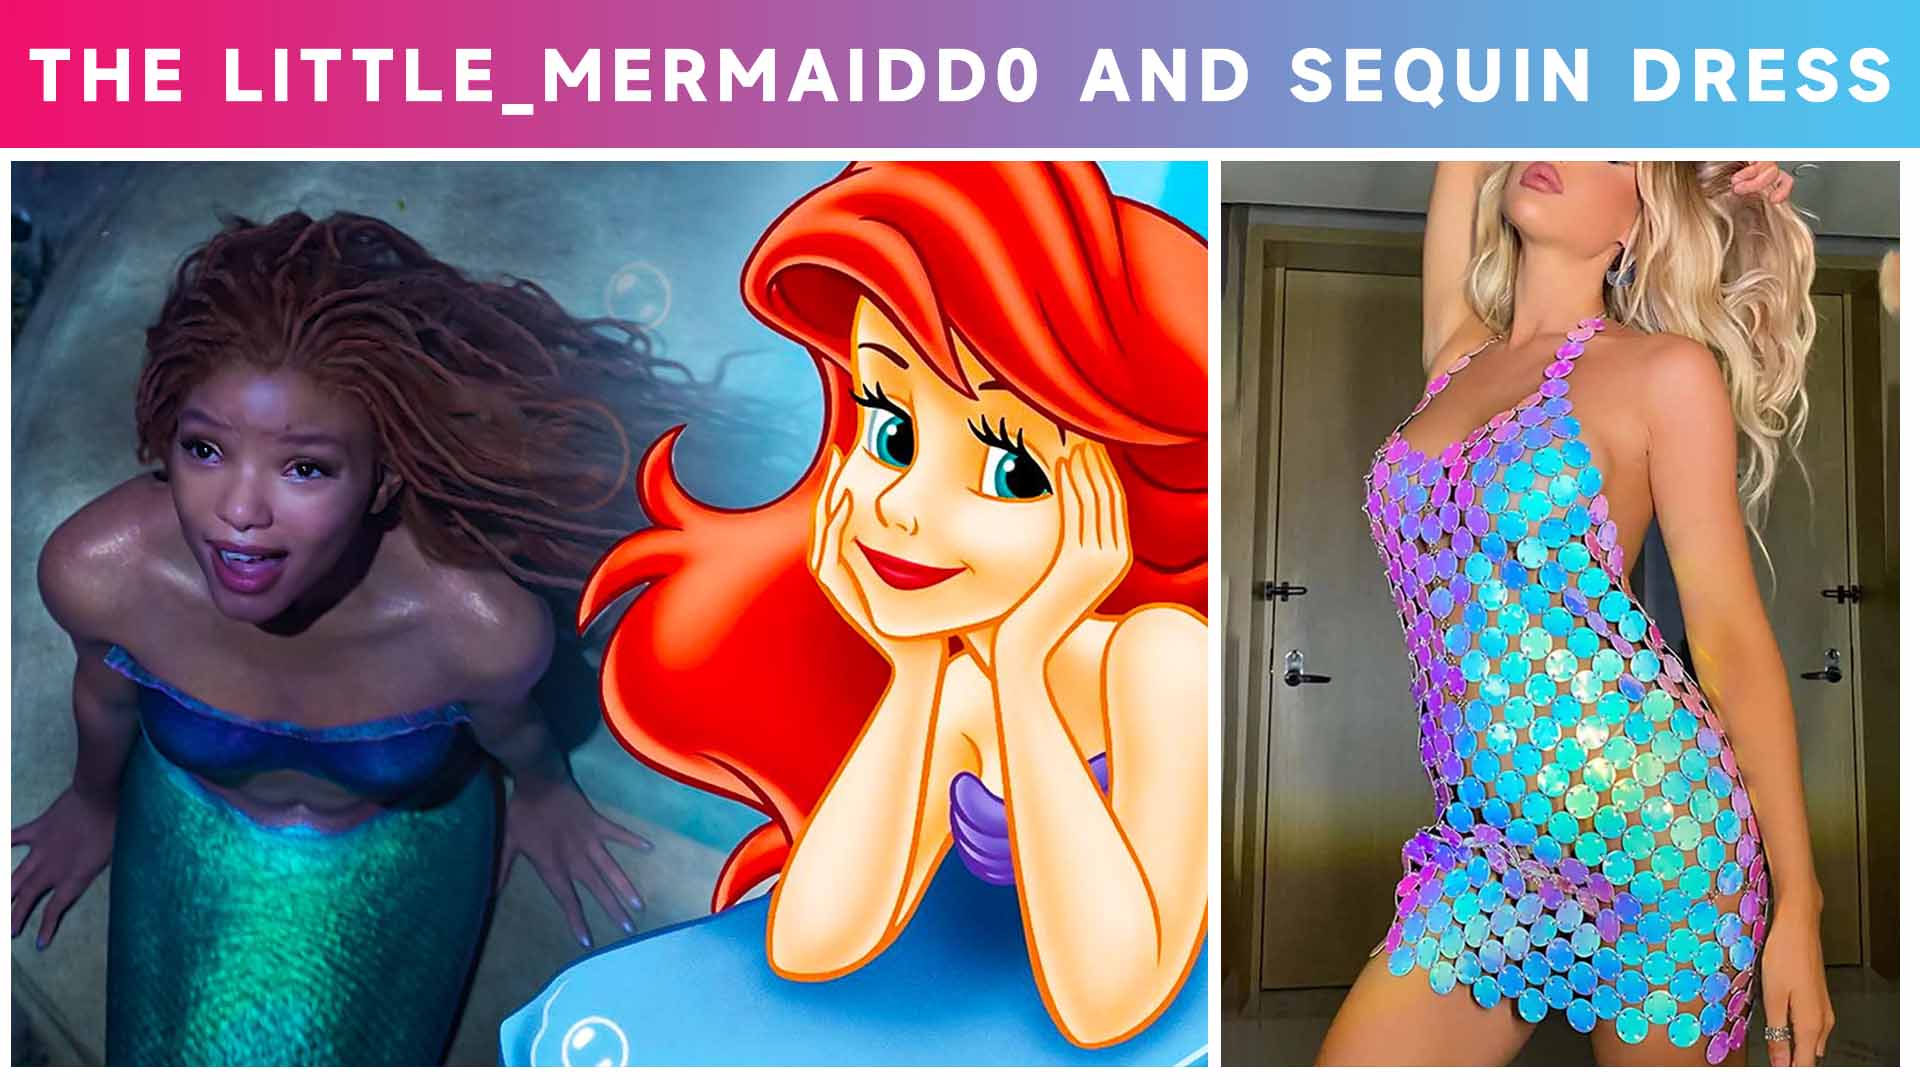 What Kind Of Sequin Dress Should The Little_mermaidd0 Wear